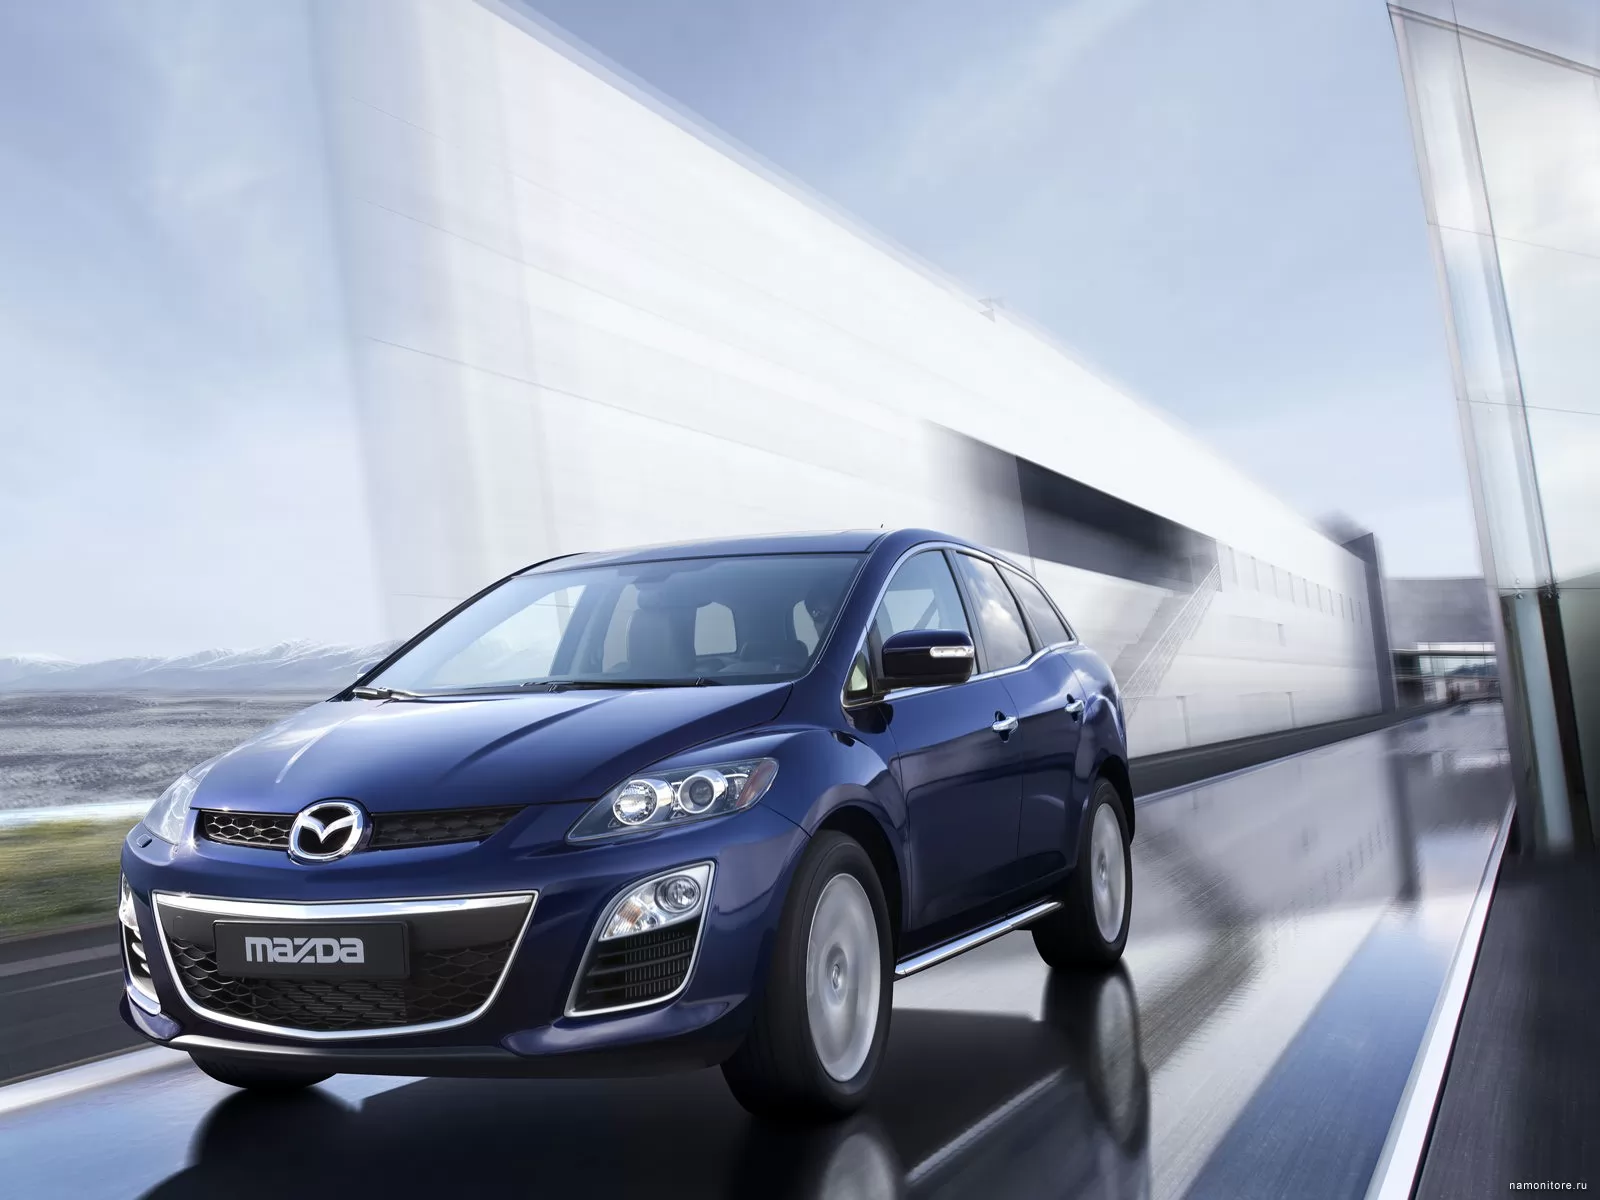 Mazda CX-7, cars, dark blue, highway, Mazda, speed, technics x